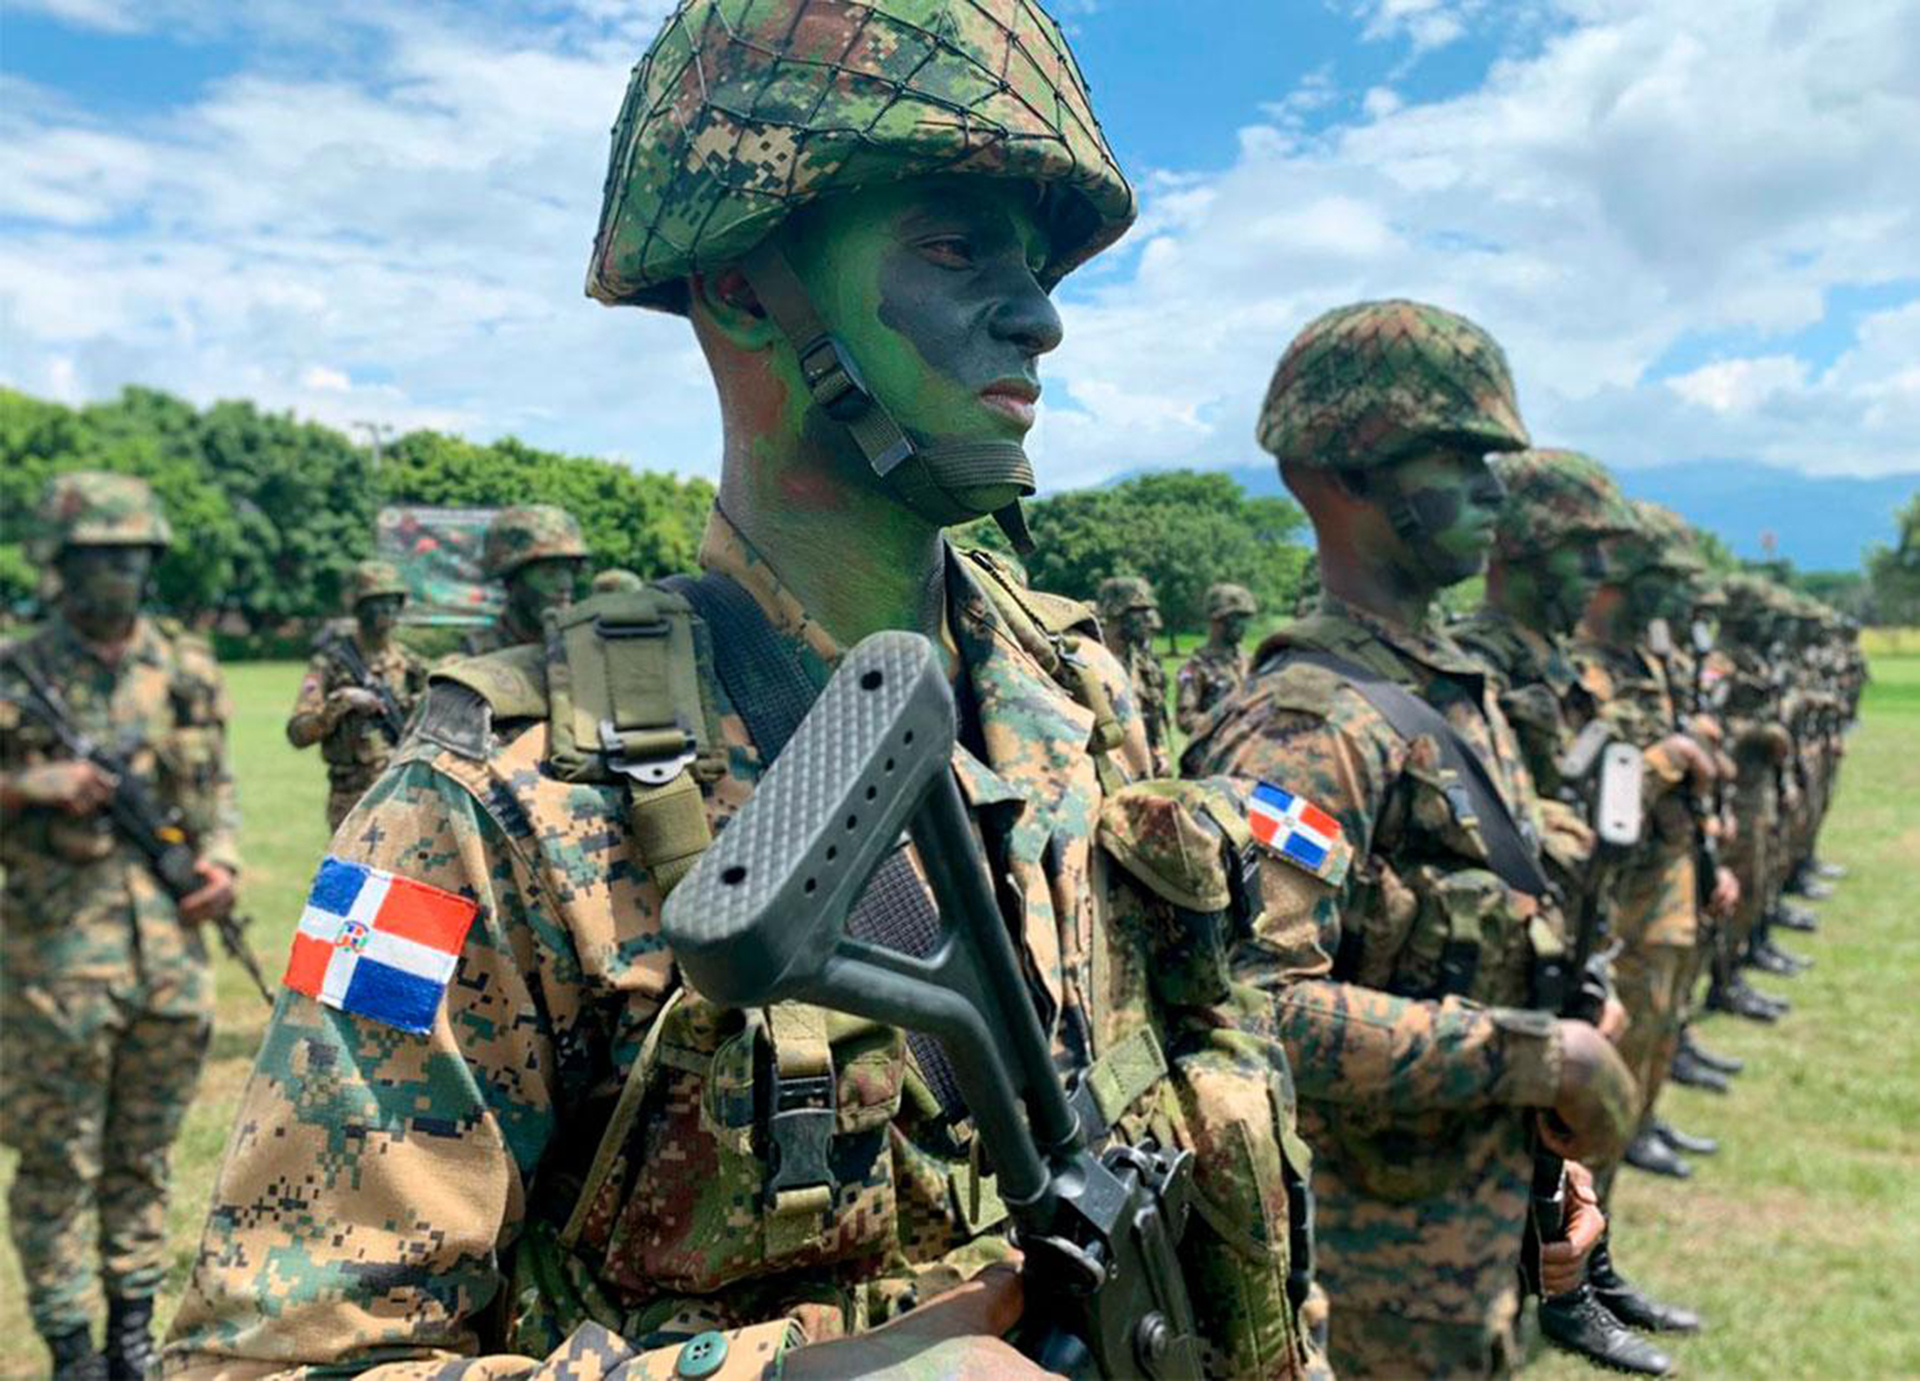 Dominican Republic’s Army issues recruitment call DOMINICAN REPUBLIC LIVE